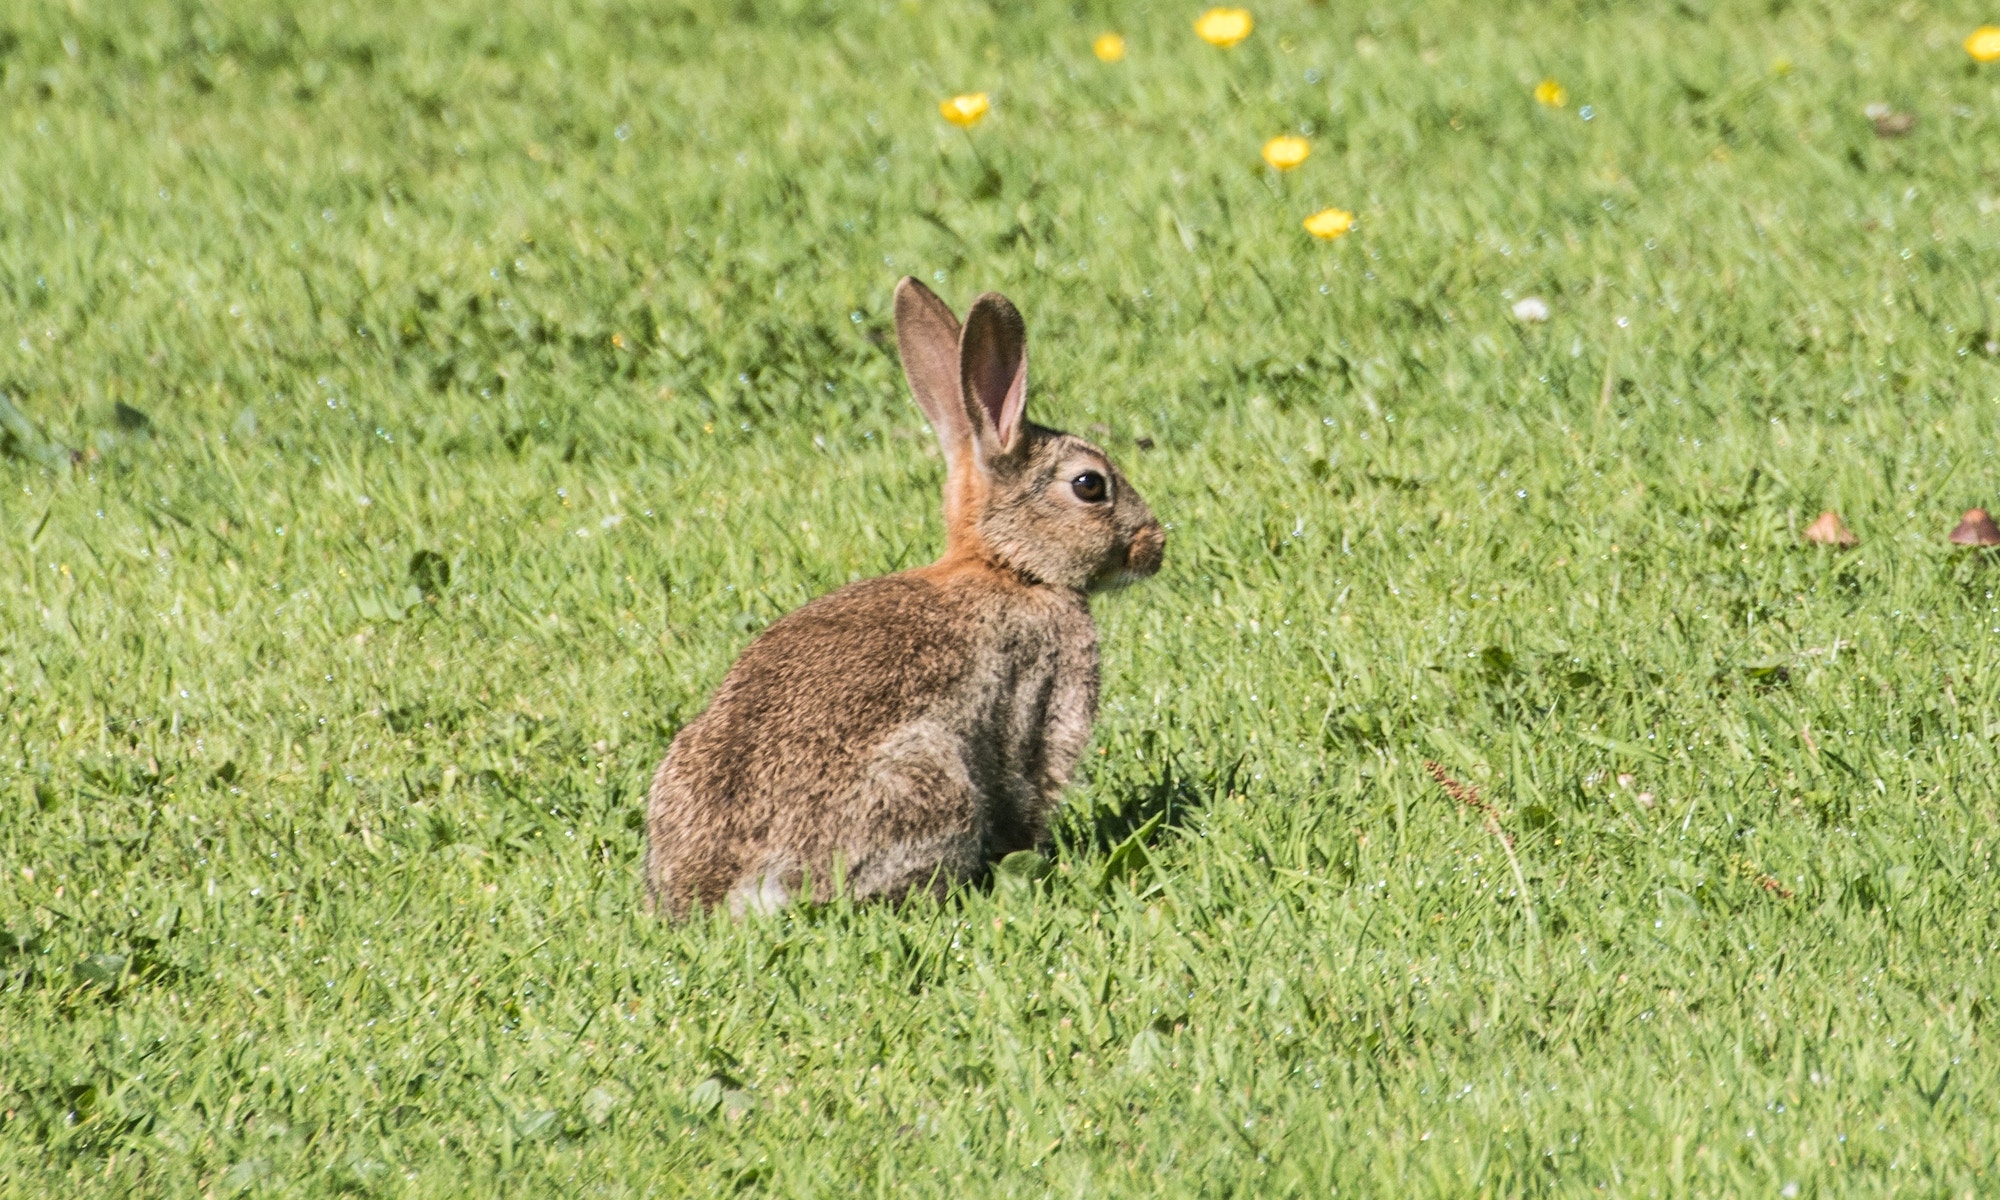 Rabbit in a field of grass